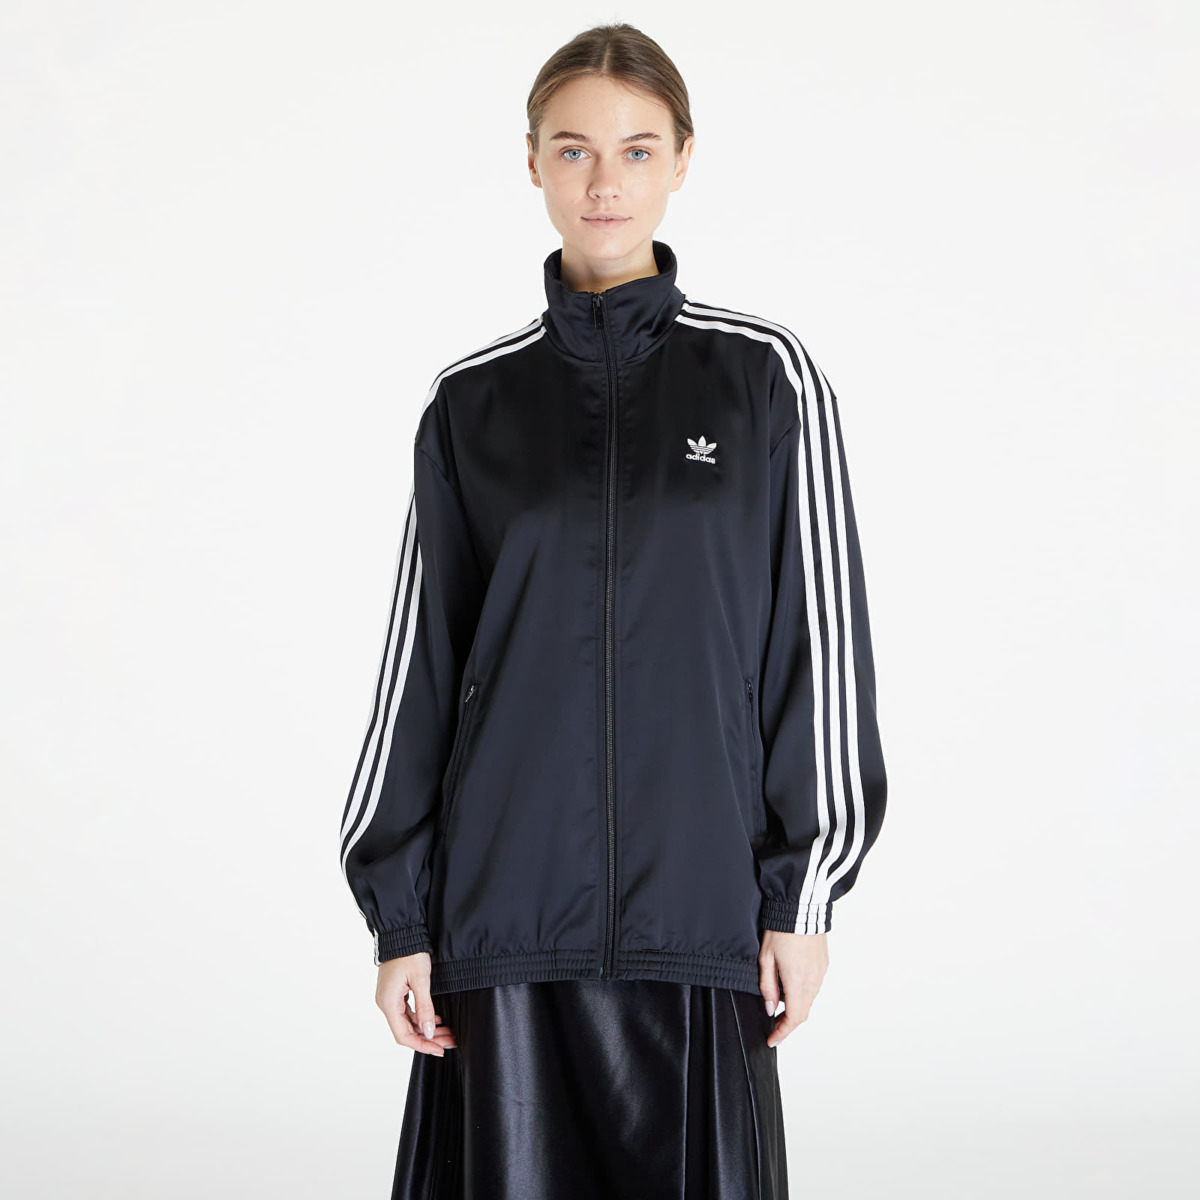 Adidas - Lady Jacket in Black - Footshop GOOFASH